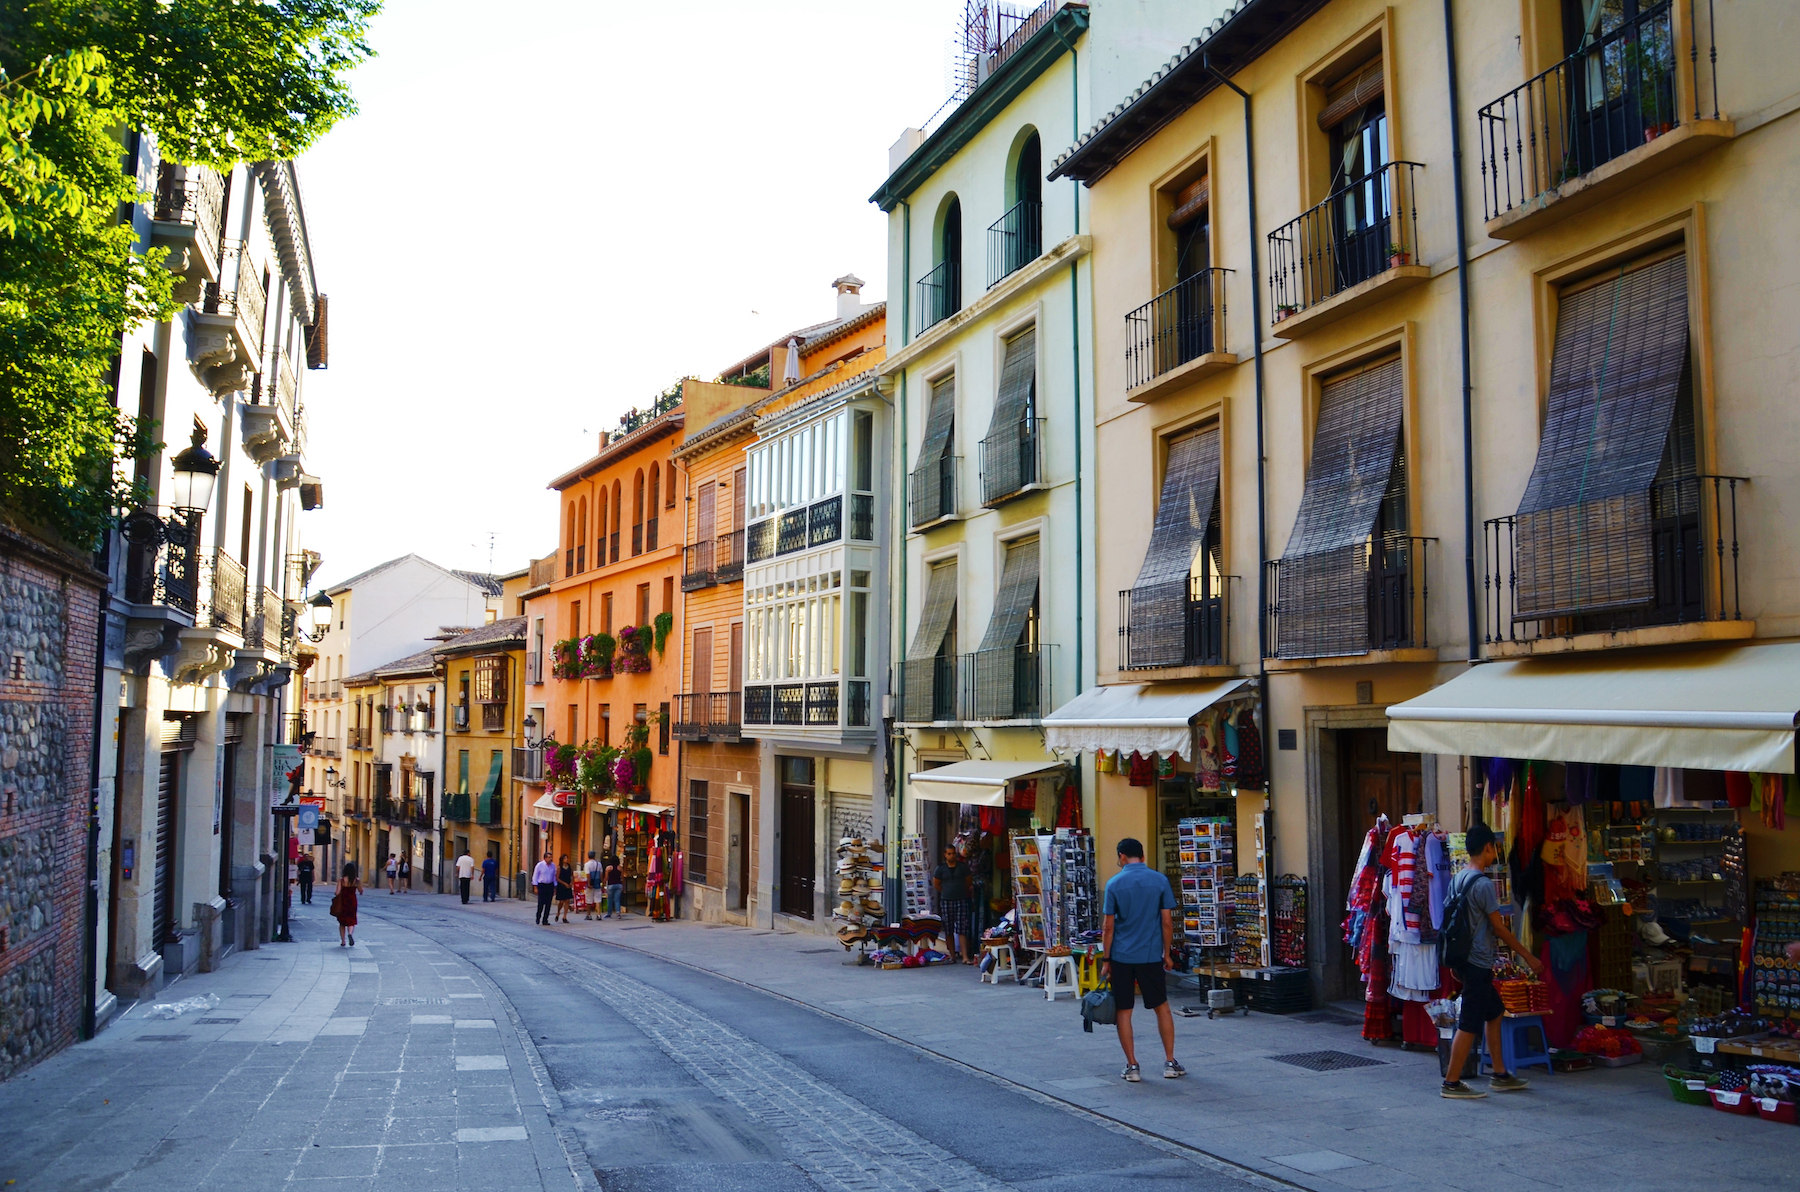 Cómo pasar un fin de semana perfecto en hermosa Granada, España - 19